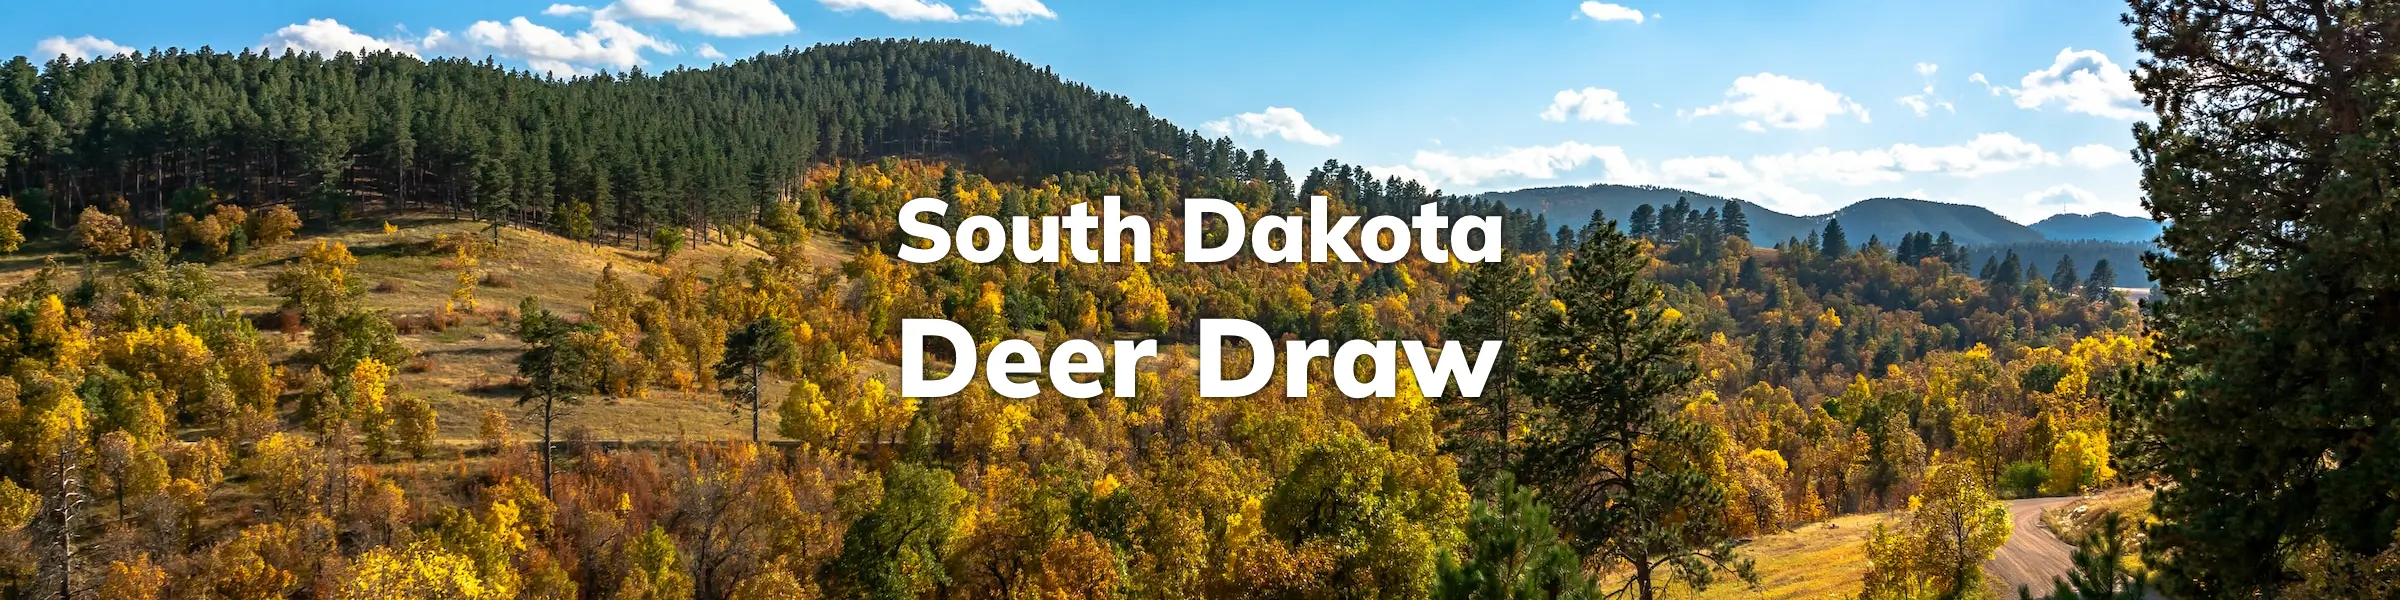 South Dakota Deer Draw